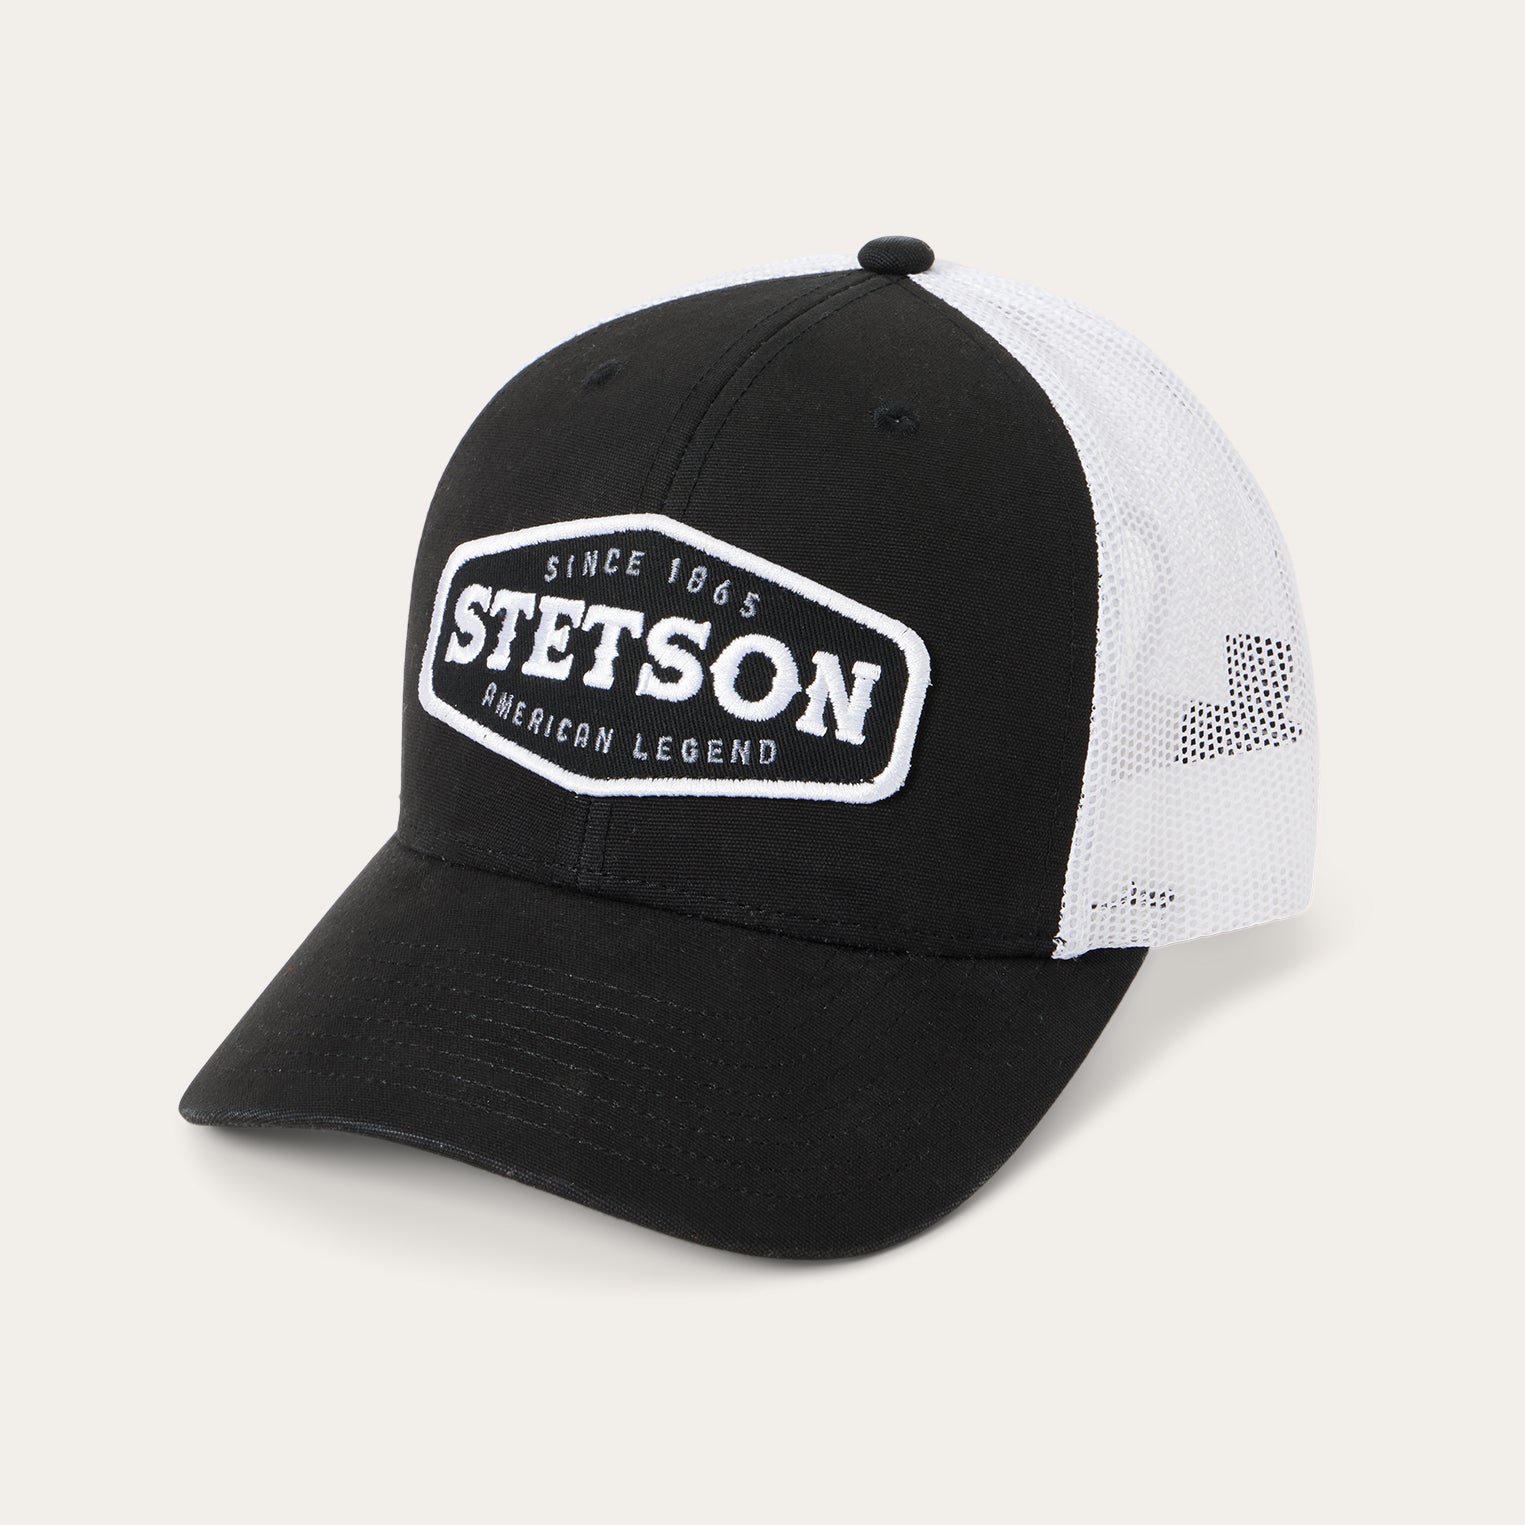 Casquette baseball coton Stetson - Custom Legend